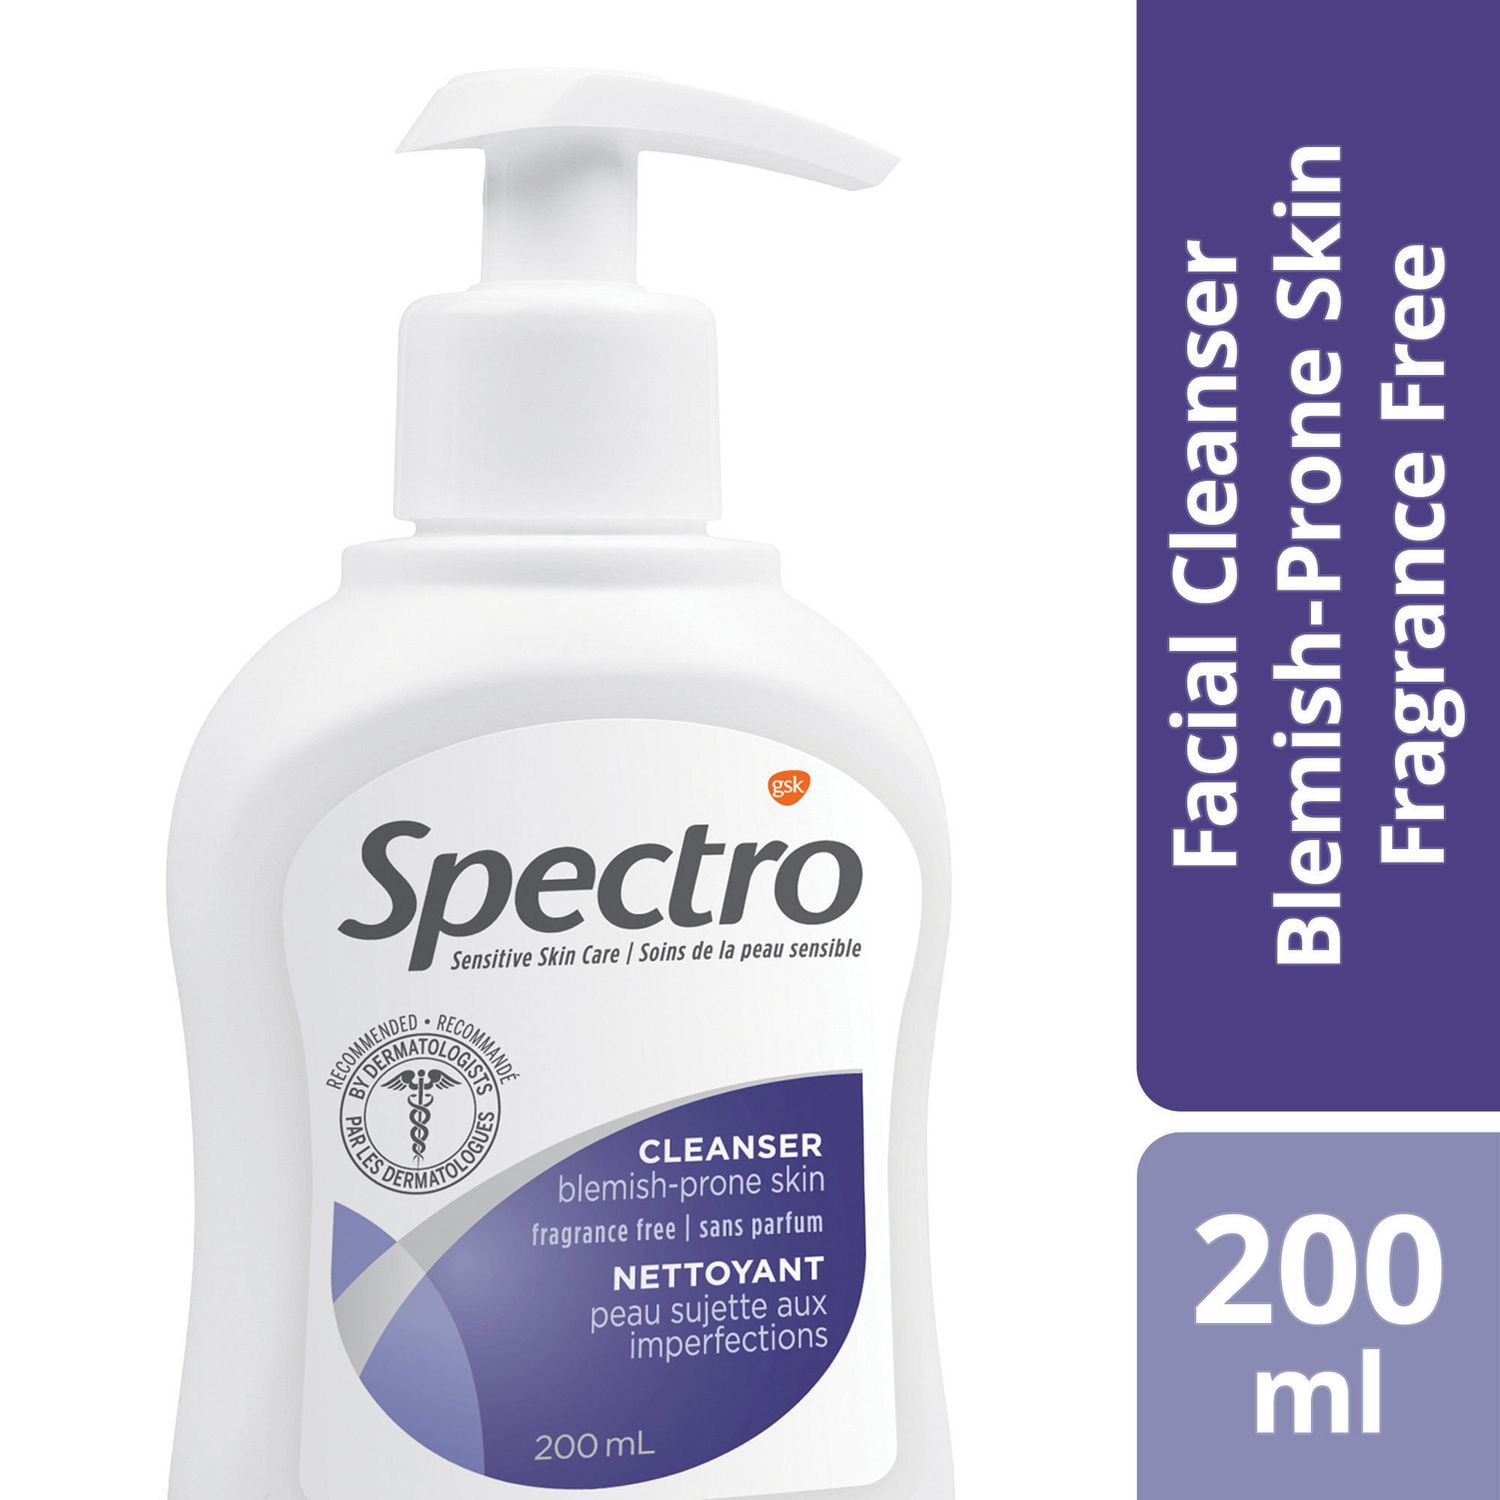 Skincare  New Spectro Cleanser Blemish Prone Sensitive Skin